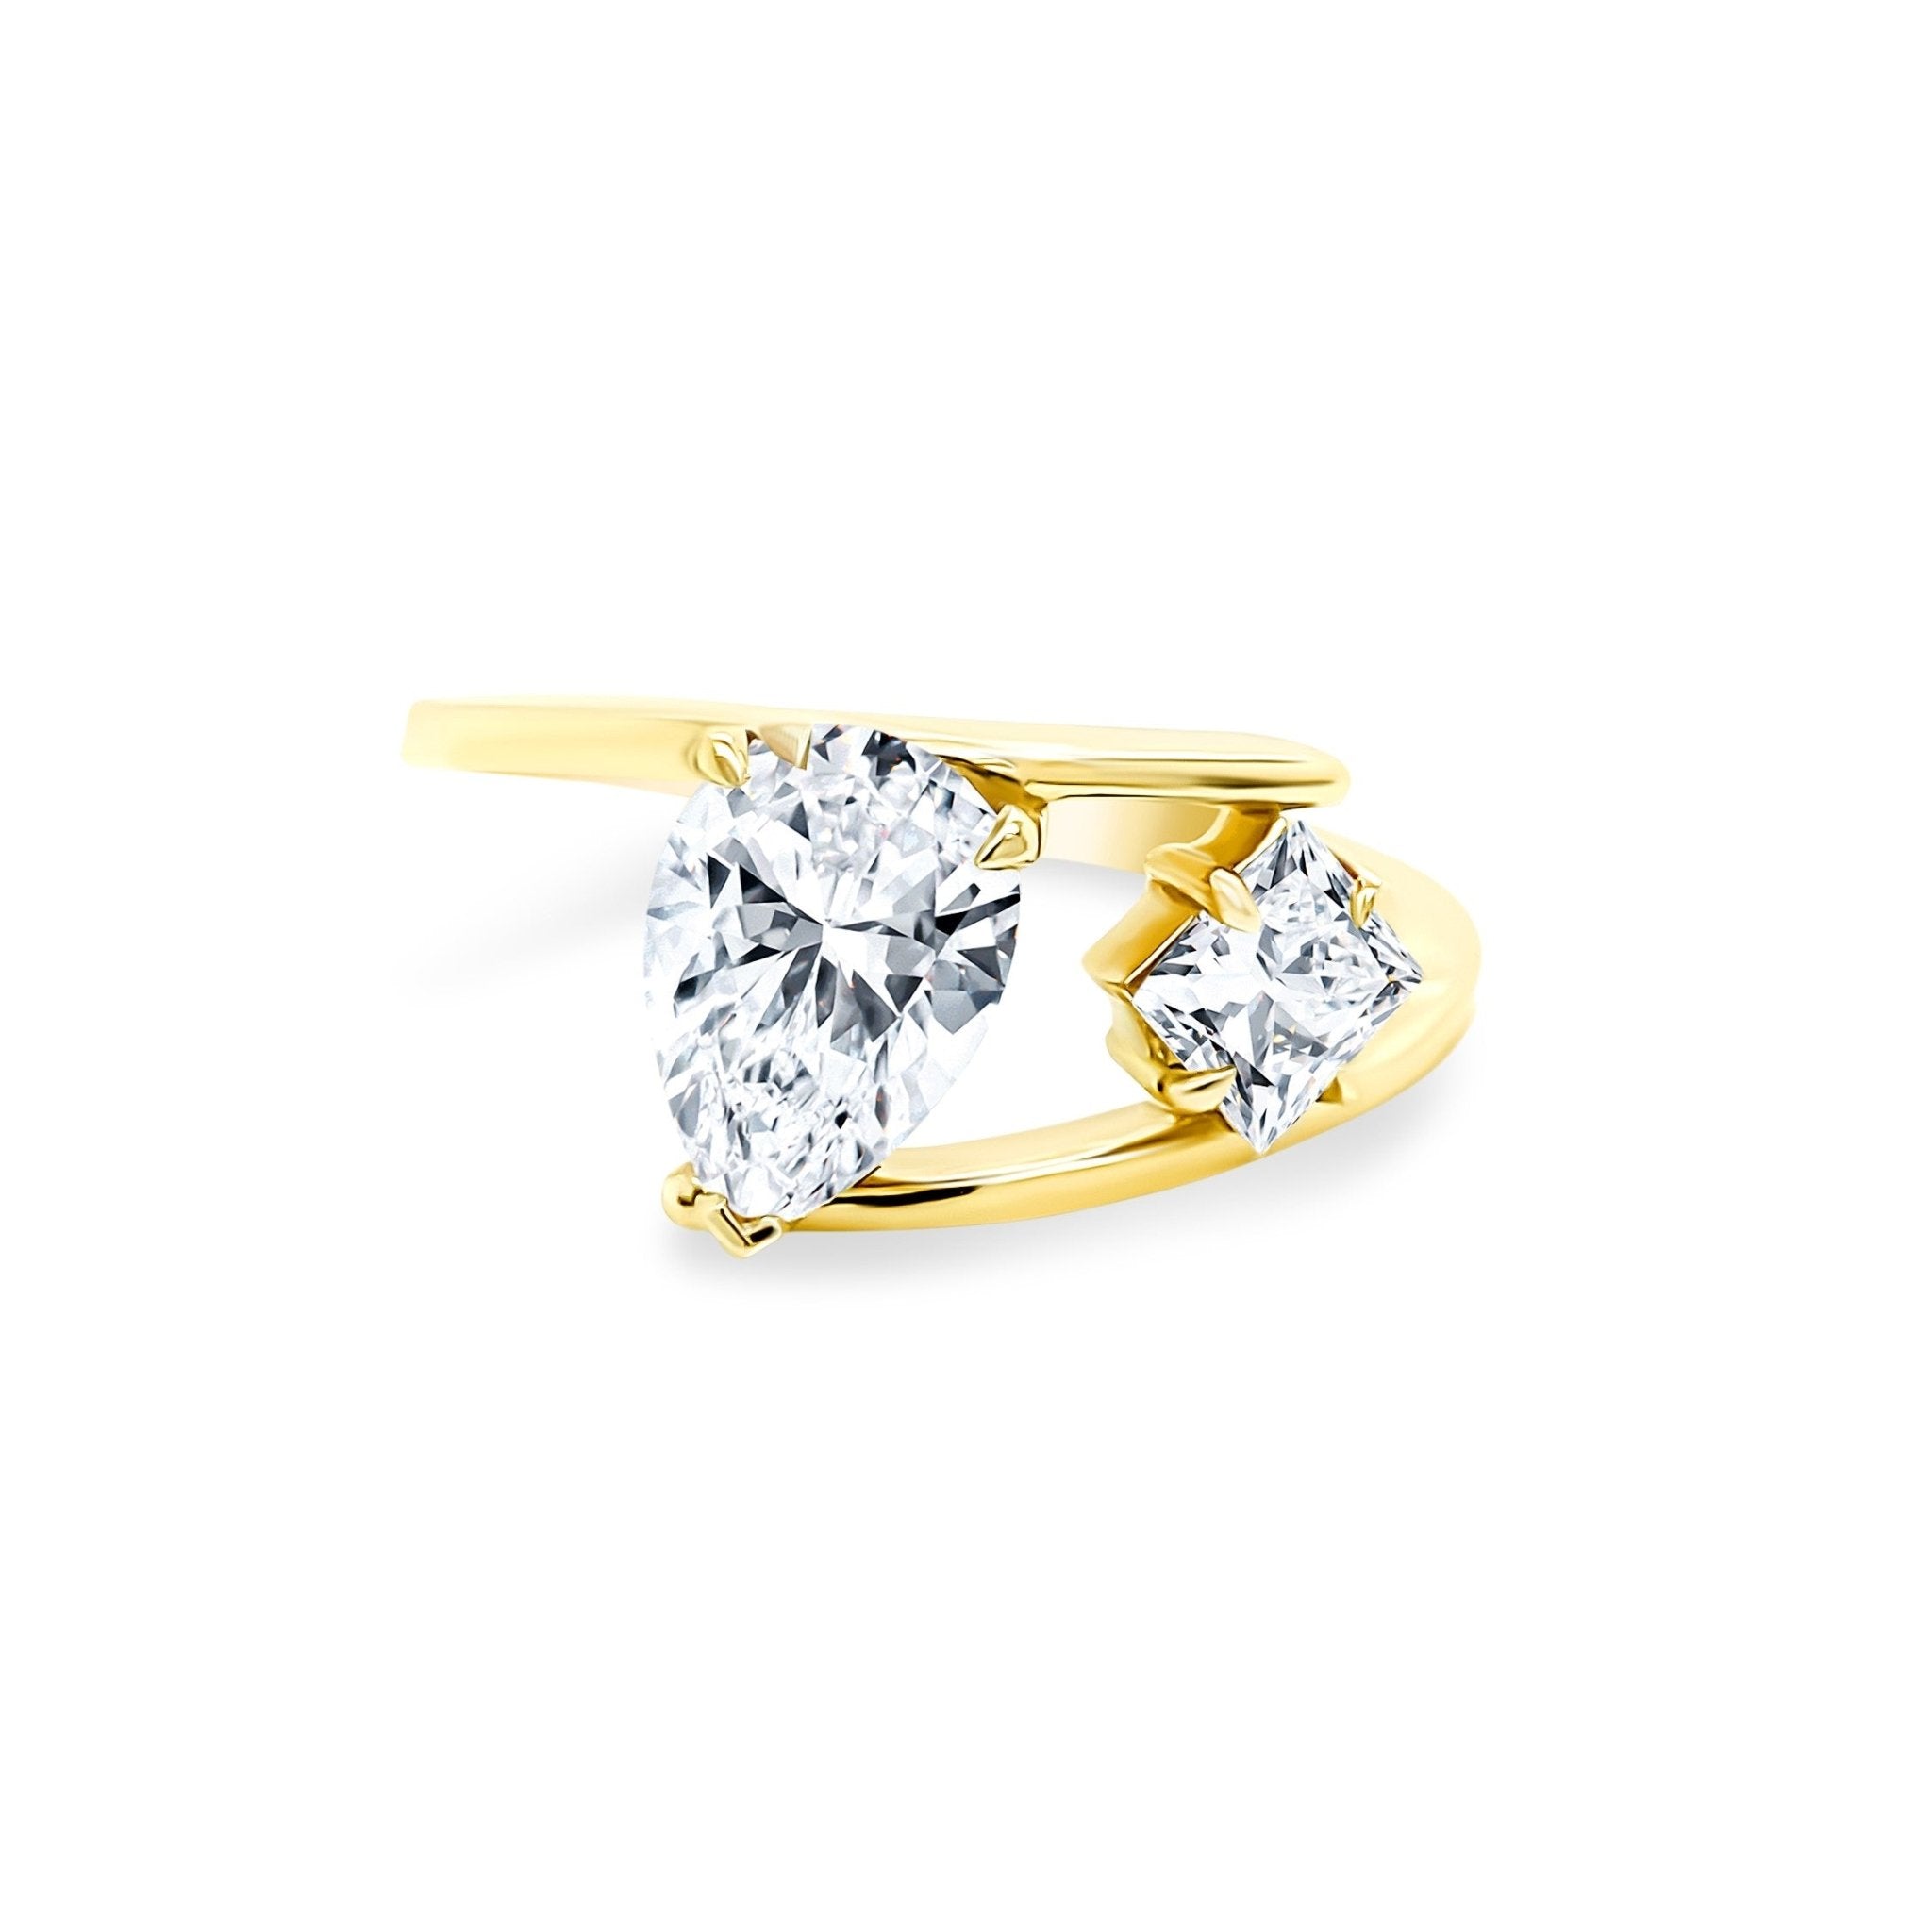 Romantic Two Stone Engagement Rings | Cape Diamonds Blog